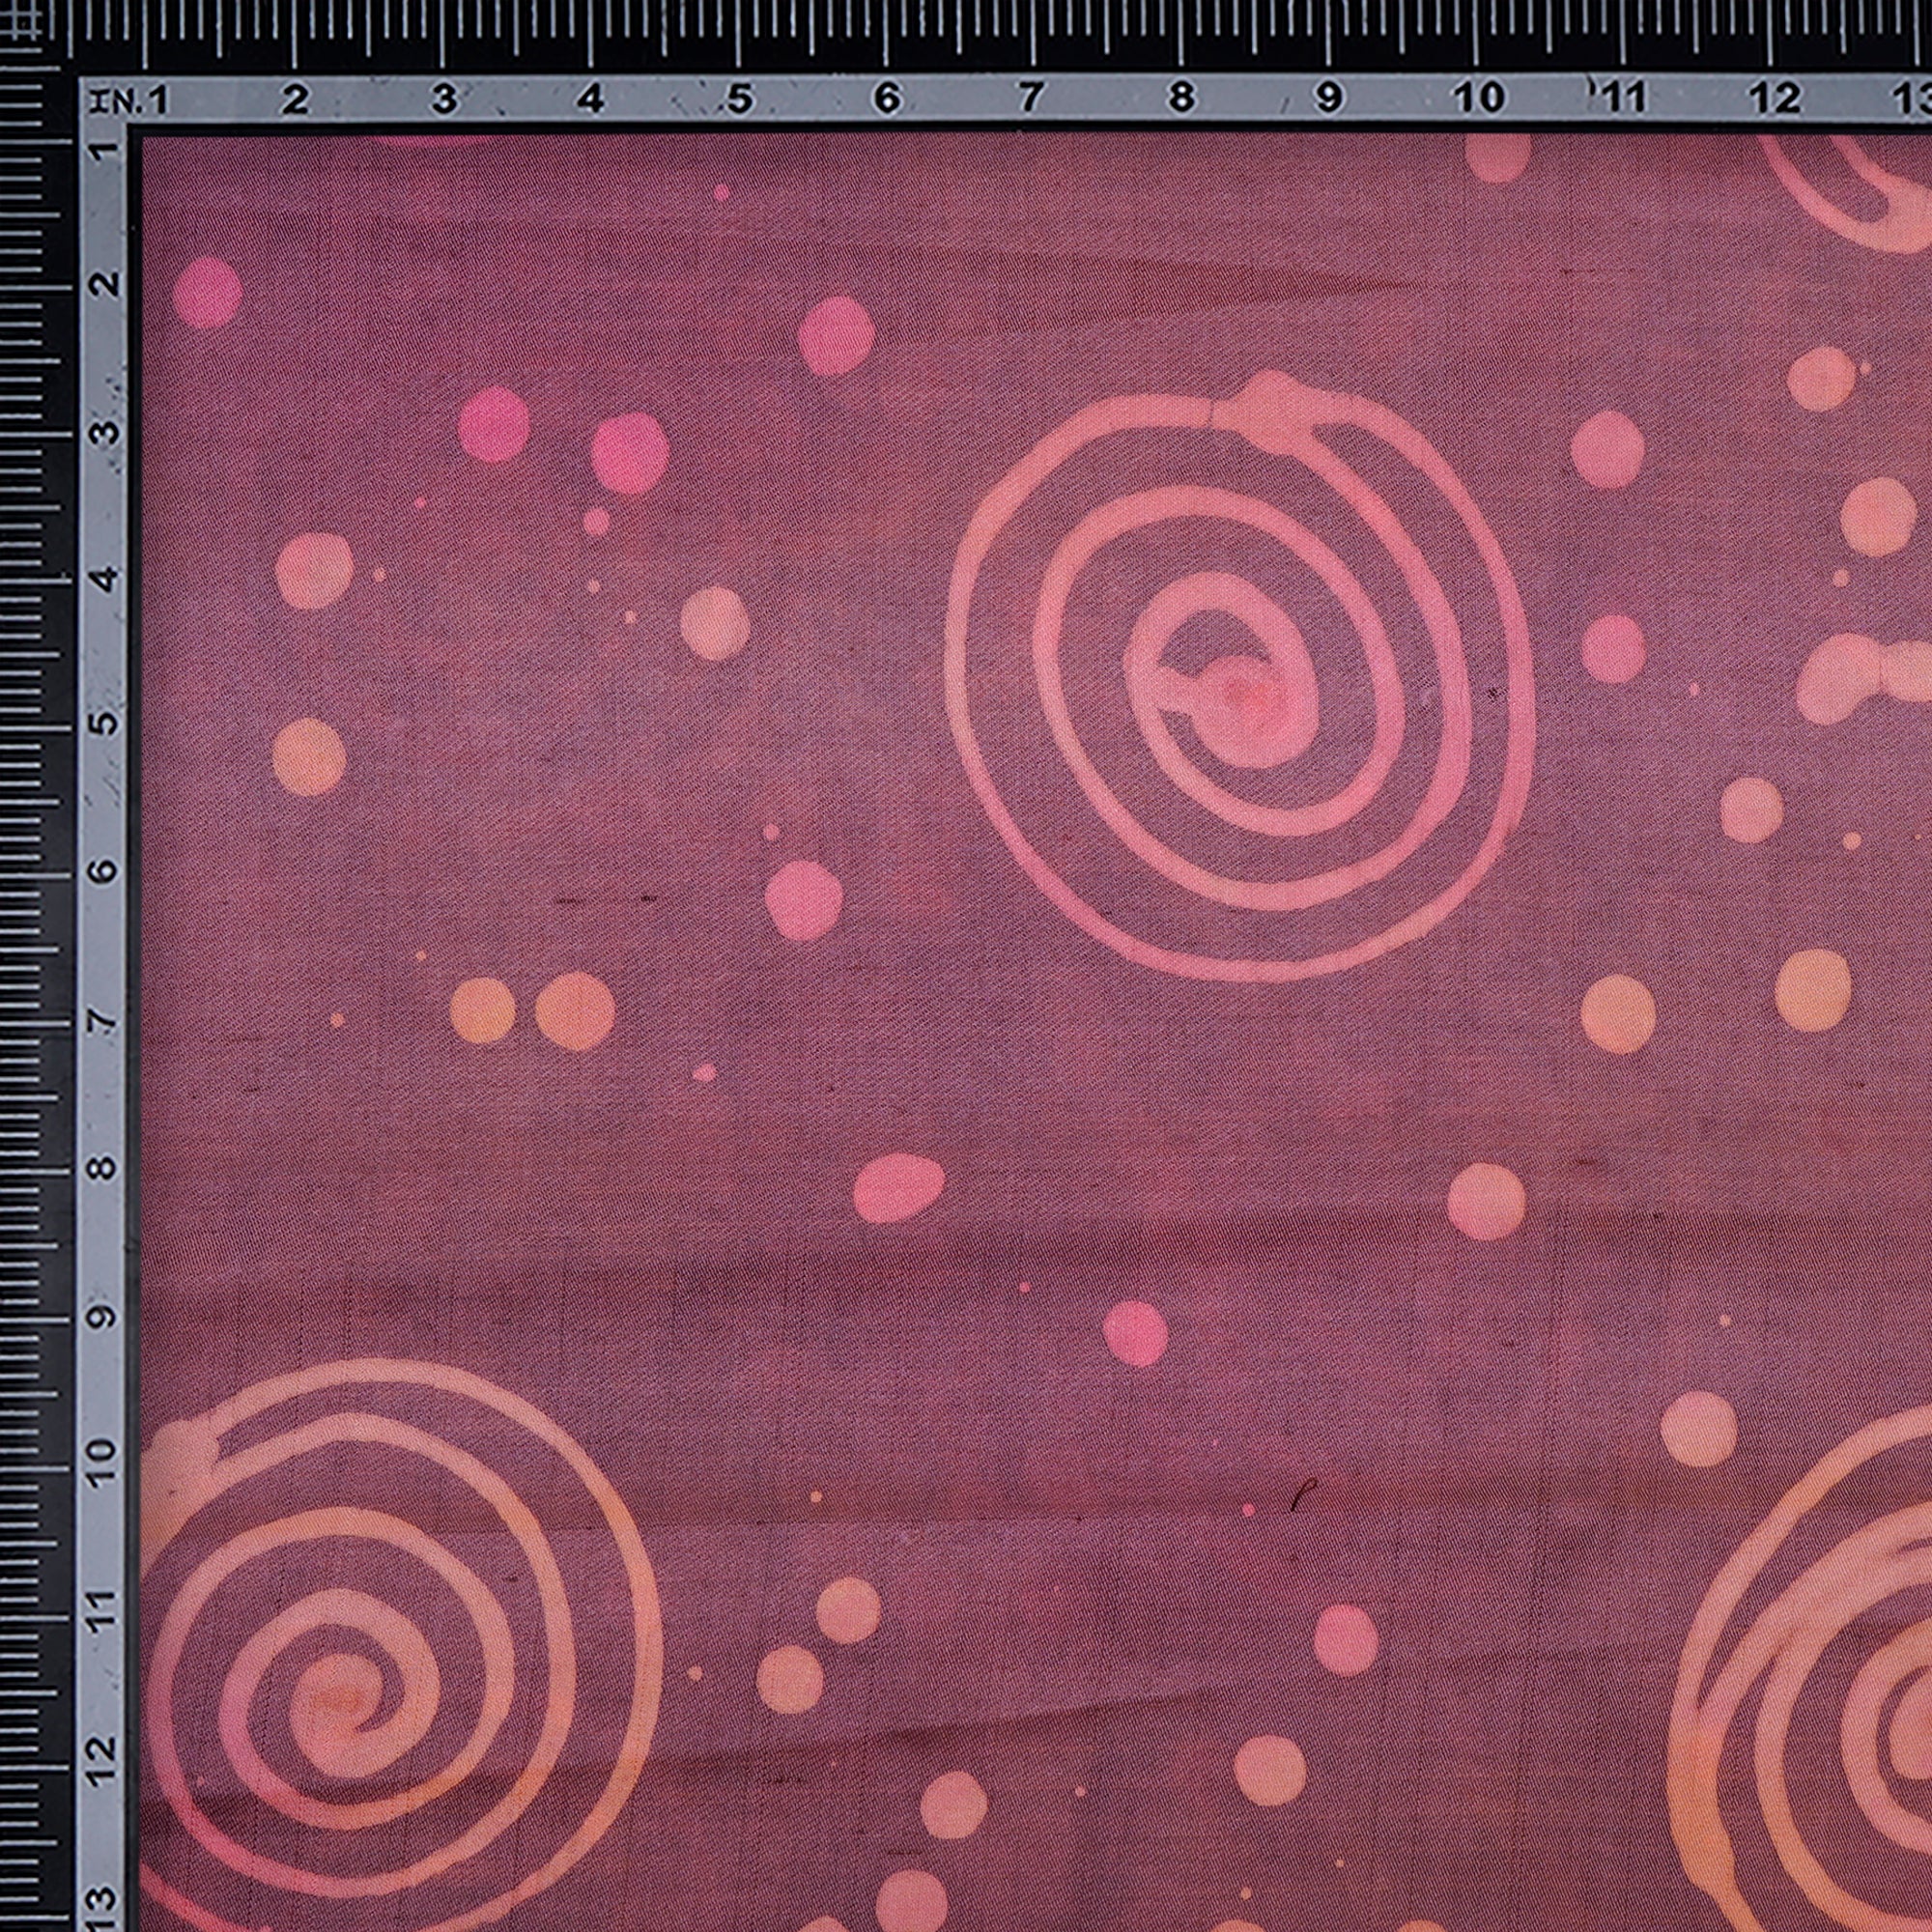 Mauve Color Printed Satin Chiffon Fabric